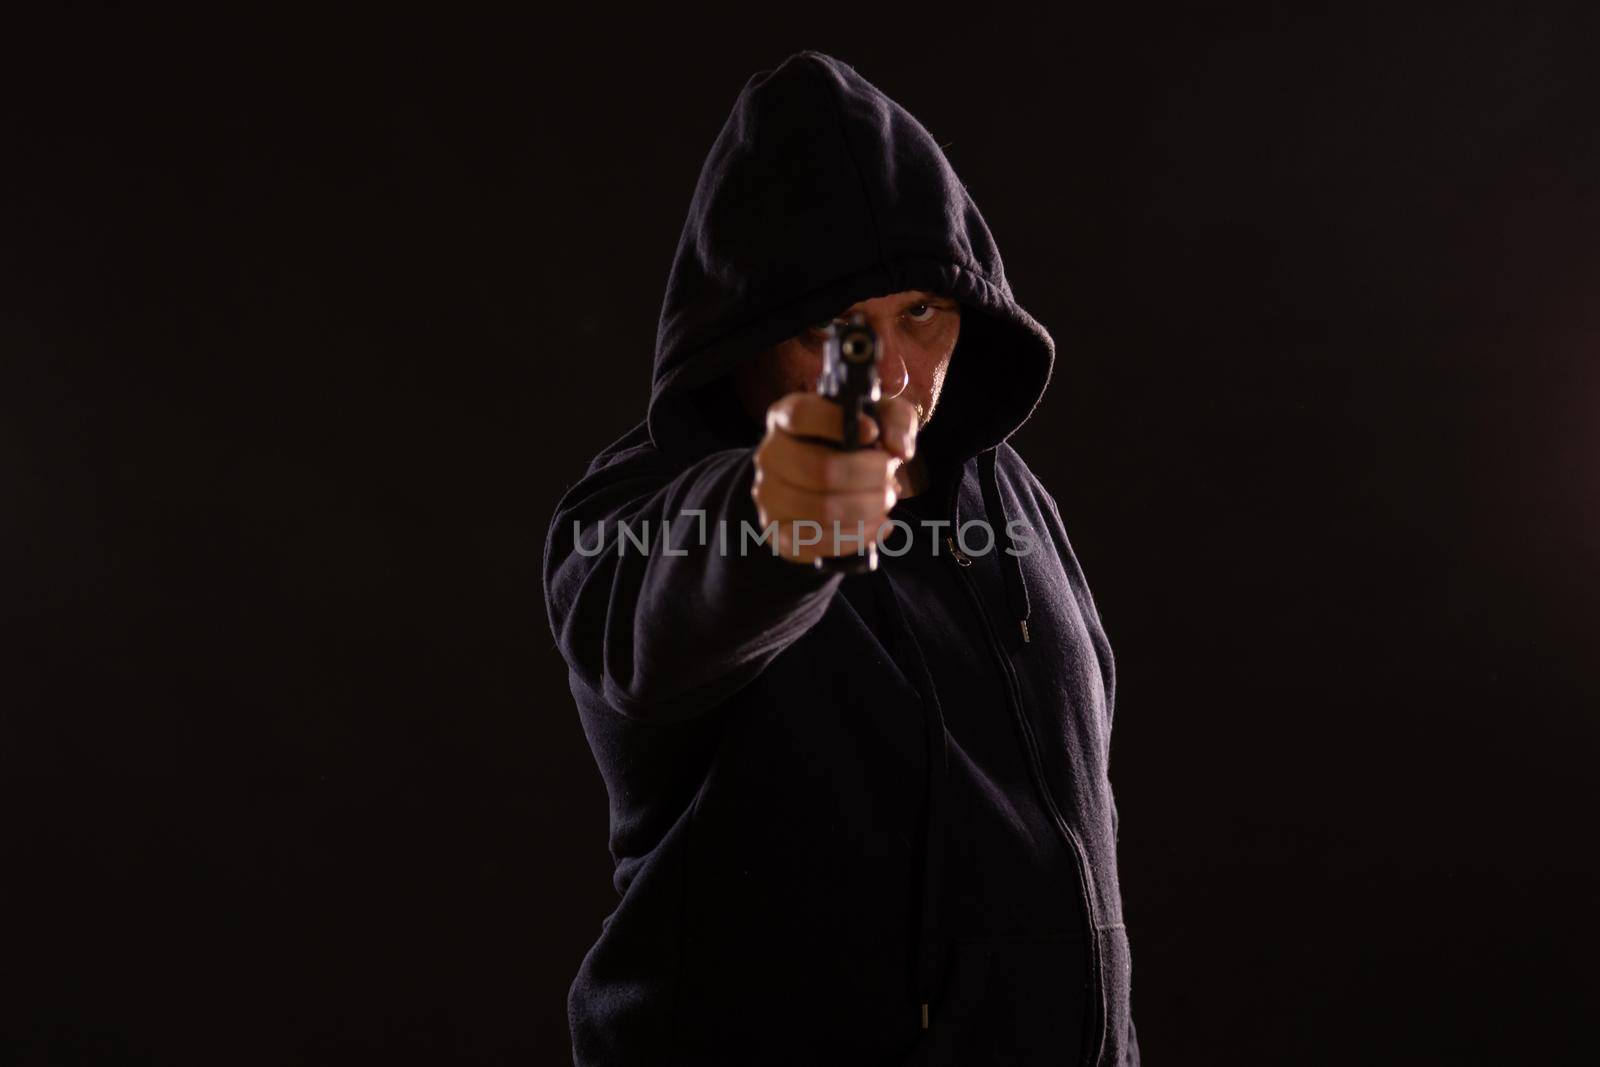 Man in black hoodie points pistol by imagesbykenny